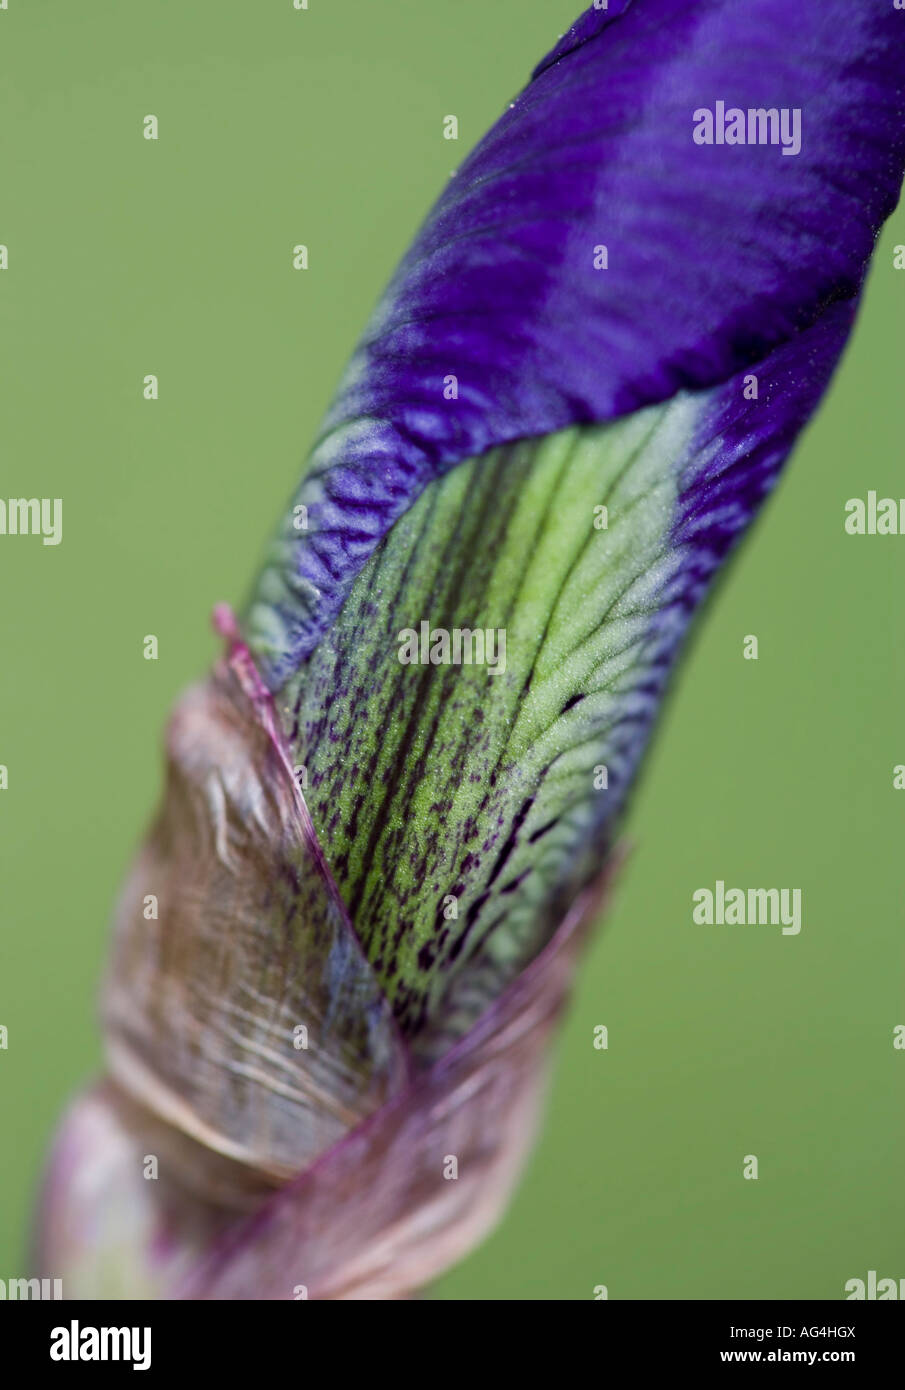 Closeup of purple iris bud against a green background Stock Photo